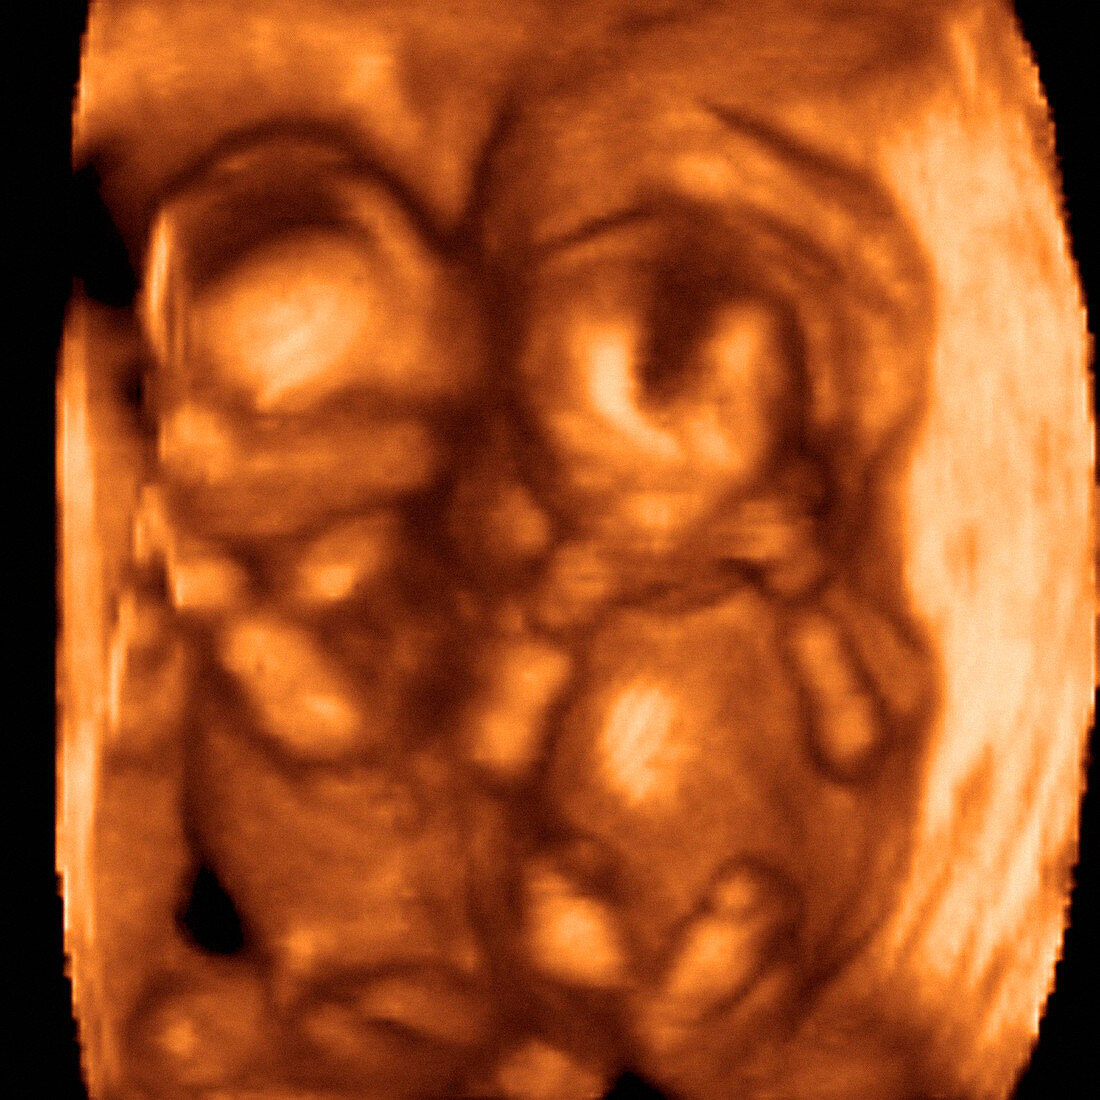 Twin foetuses,3-D ultrasound scan